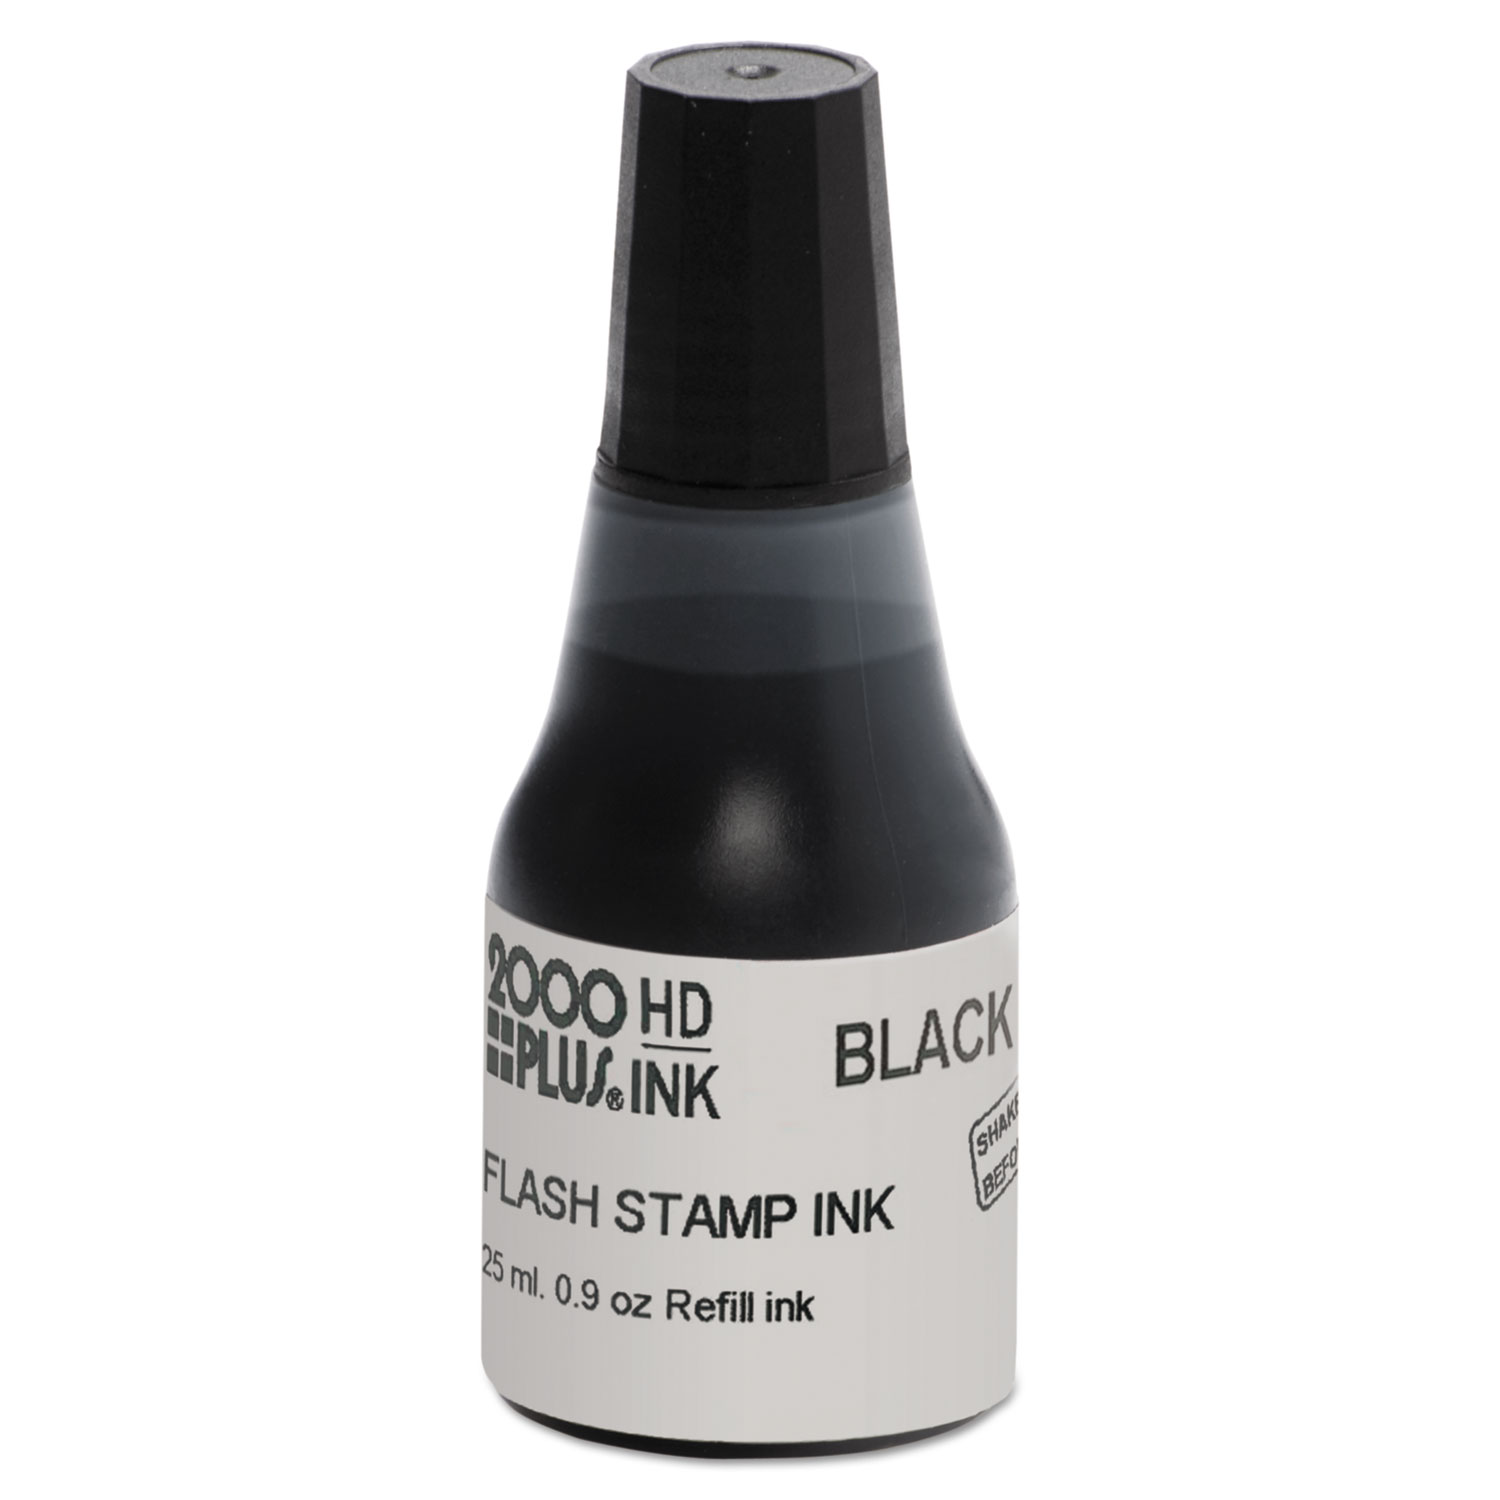  COSCO 2000PLUS 033957 Pre-Ink High Definition Refill Ink, Black, 0.9 oz. Bottle (COS033957) 